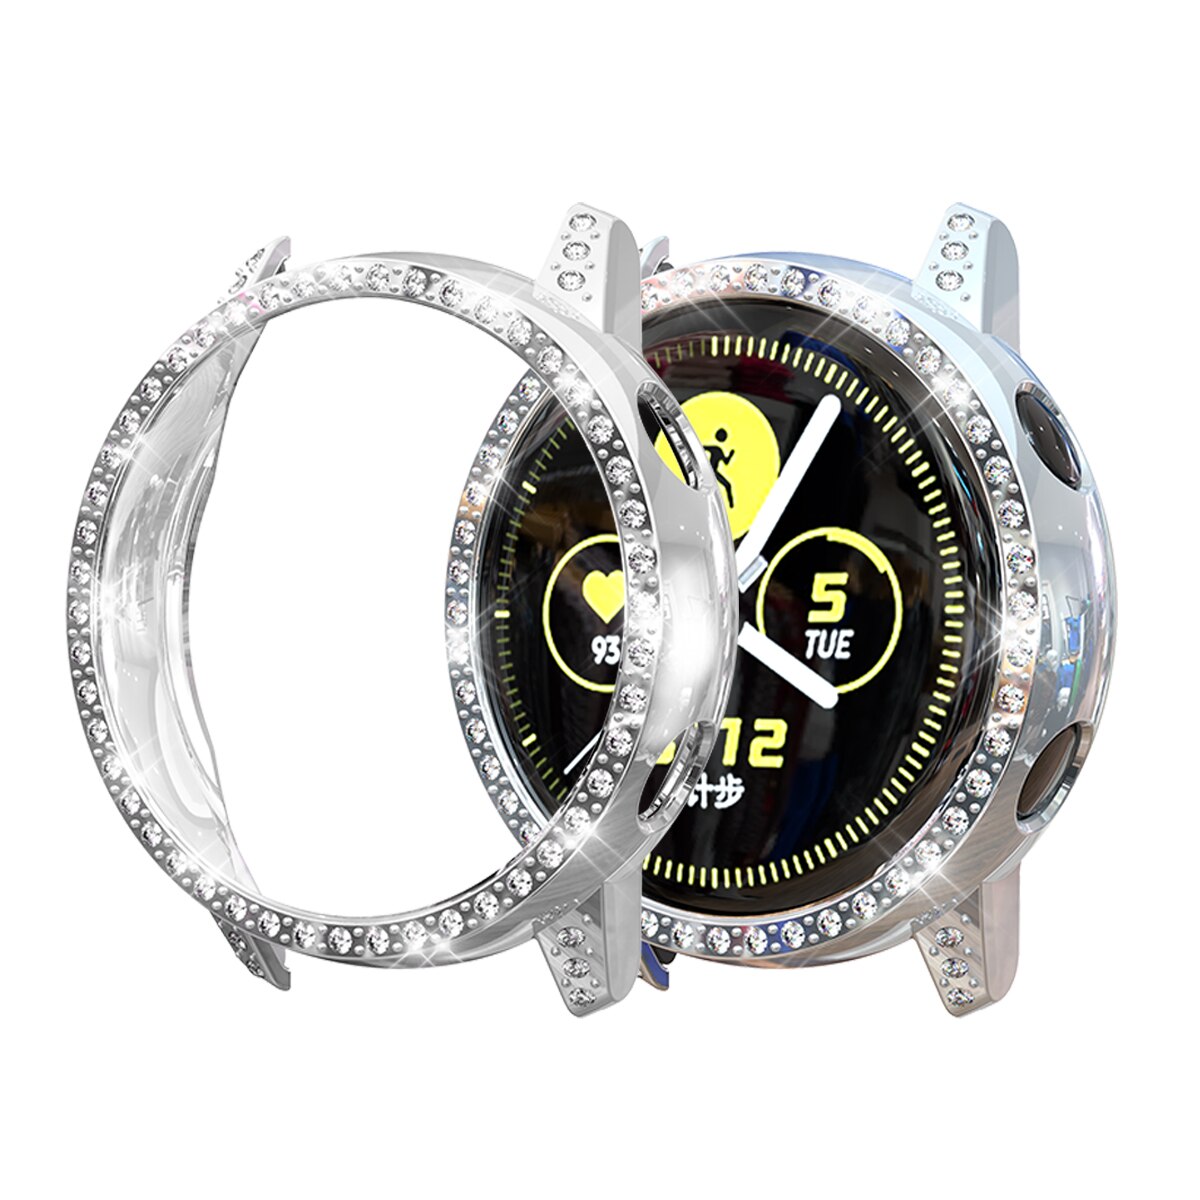 Bling diamant kofanger taske til samsung galaxy watch aktivt bånd pc beskytte cover beskyttende shell ramme smart ur tilbehør: Sølv